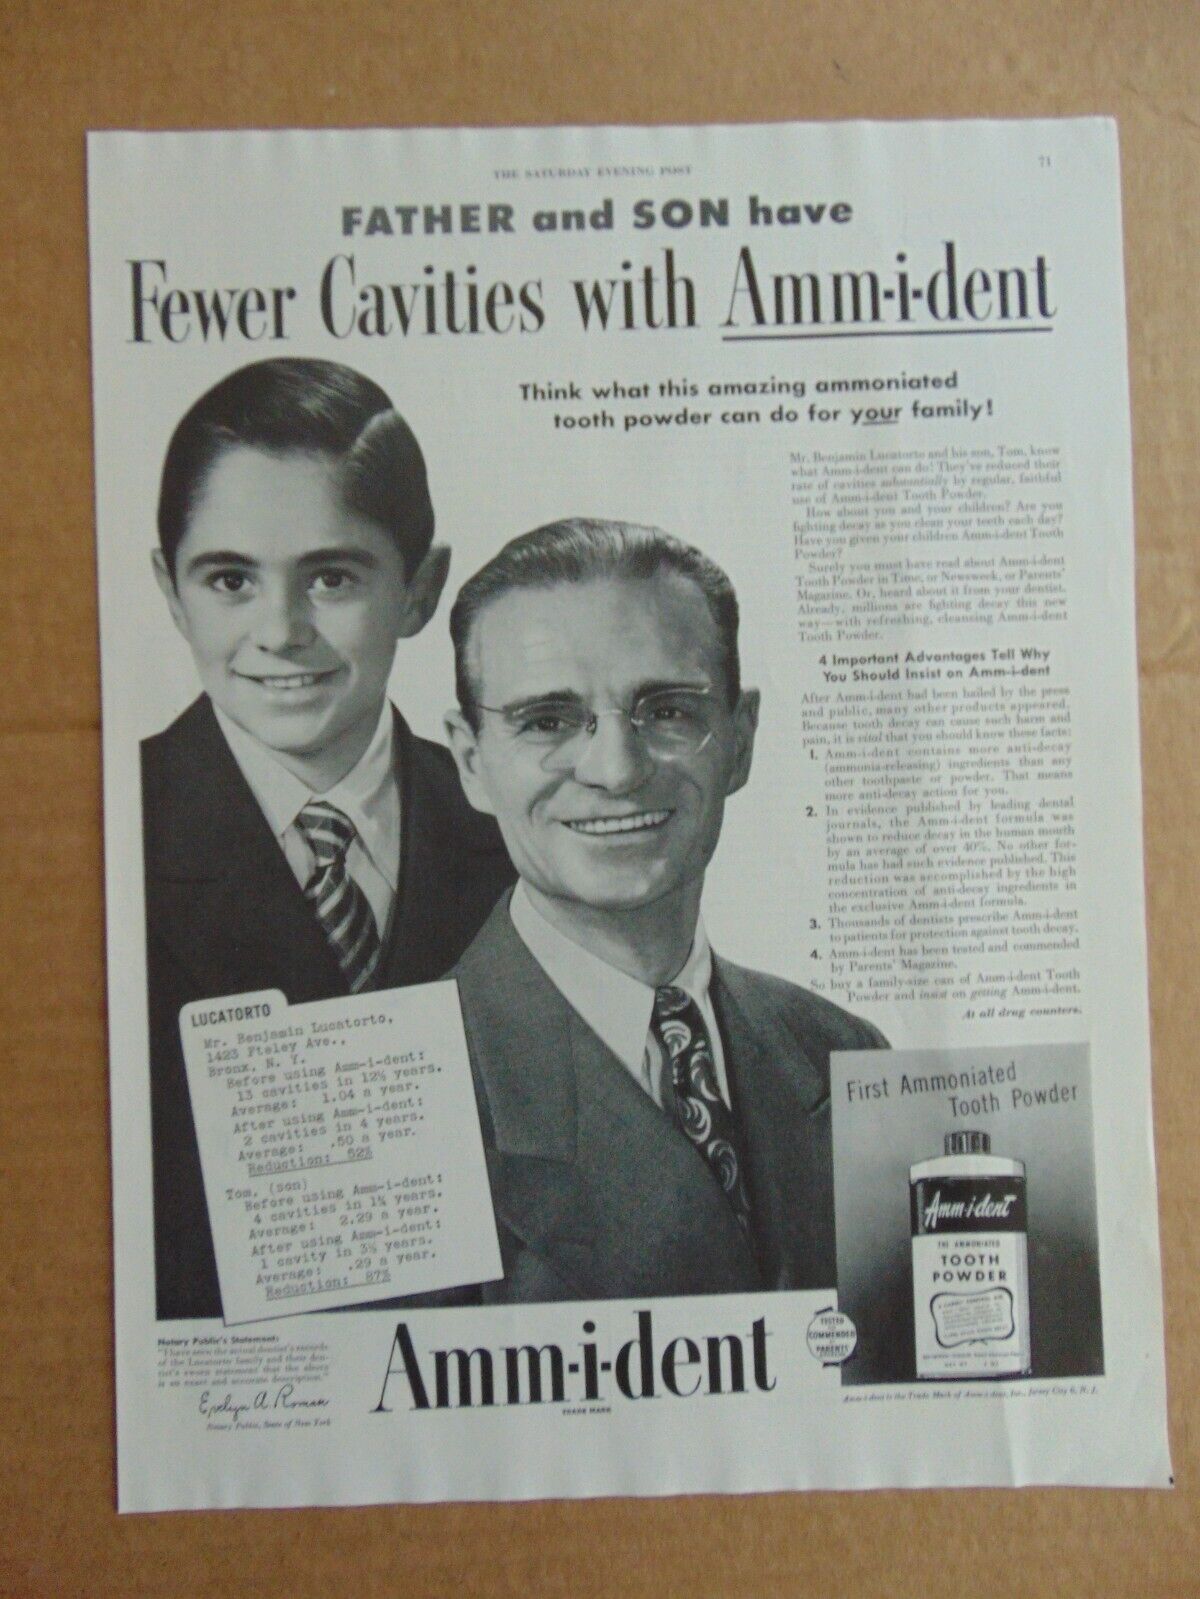 1949 Amm-i-dent Tooth Powder vintage print ad